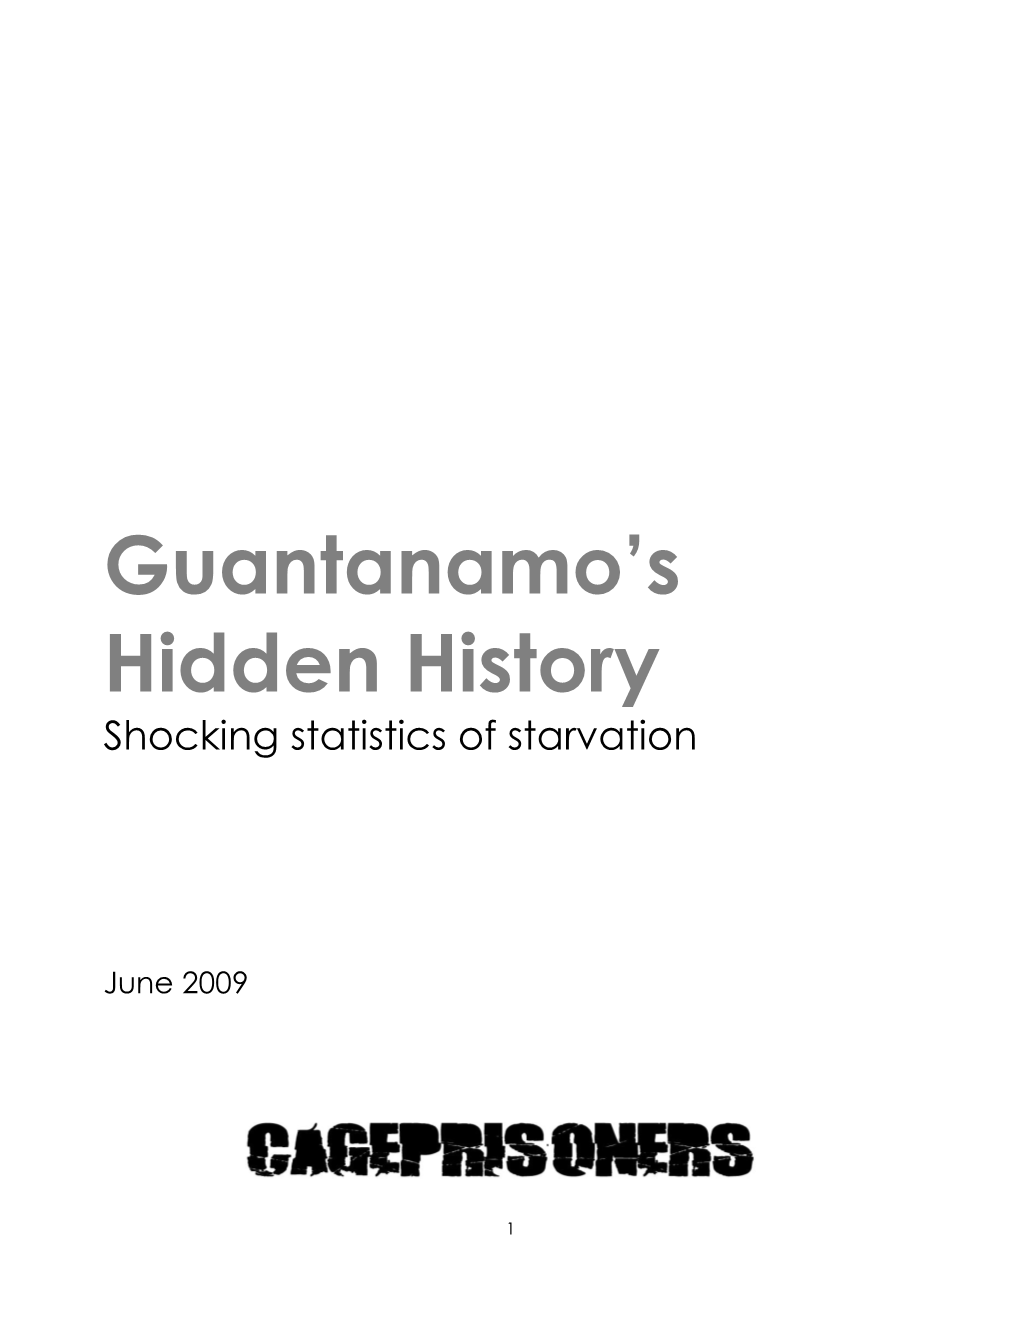 Guantanamo's Hidden History